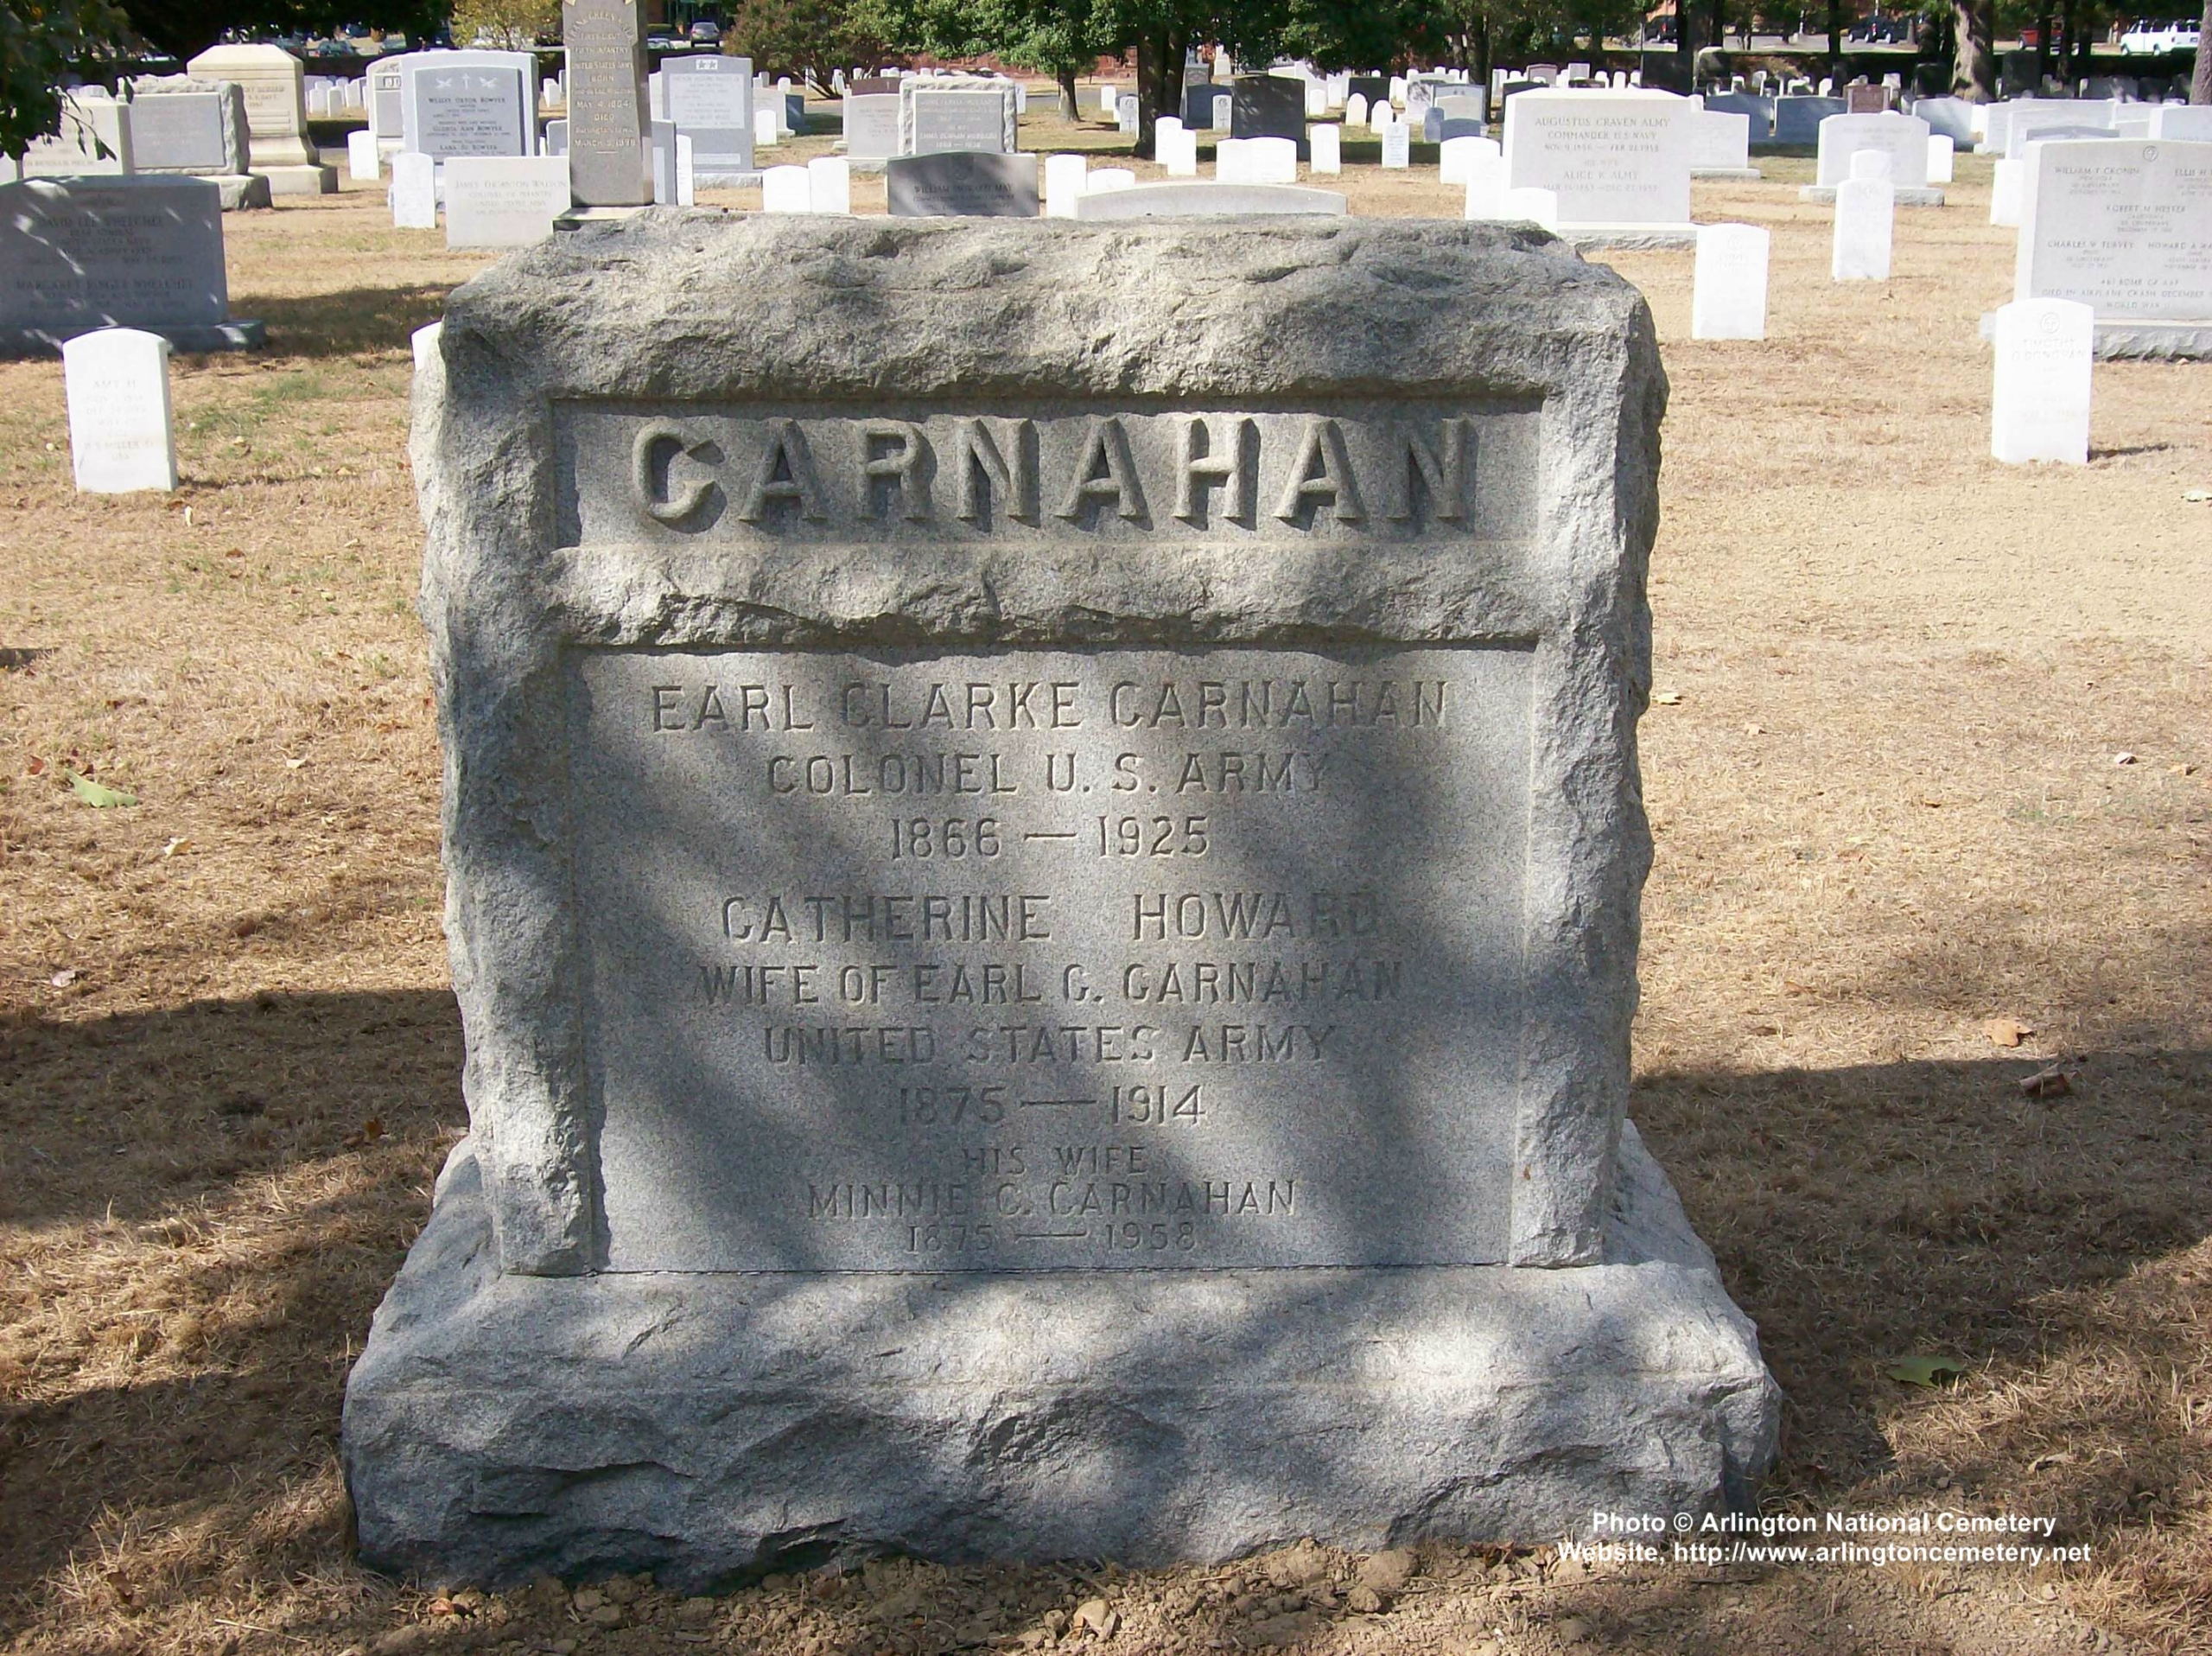 eccarnahan-gravesite-photo-october-2007-001